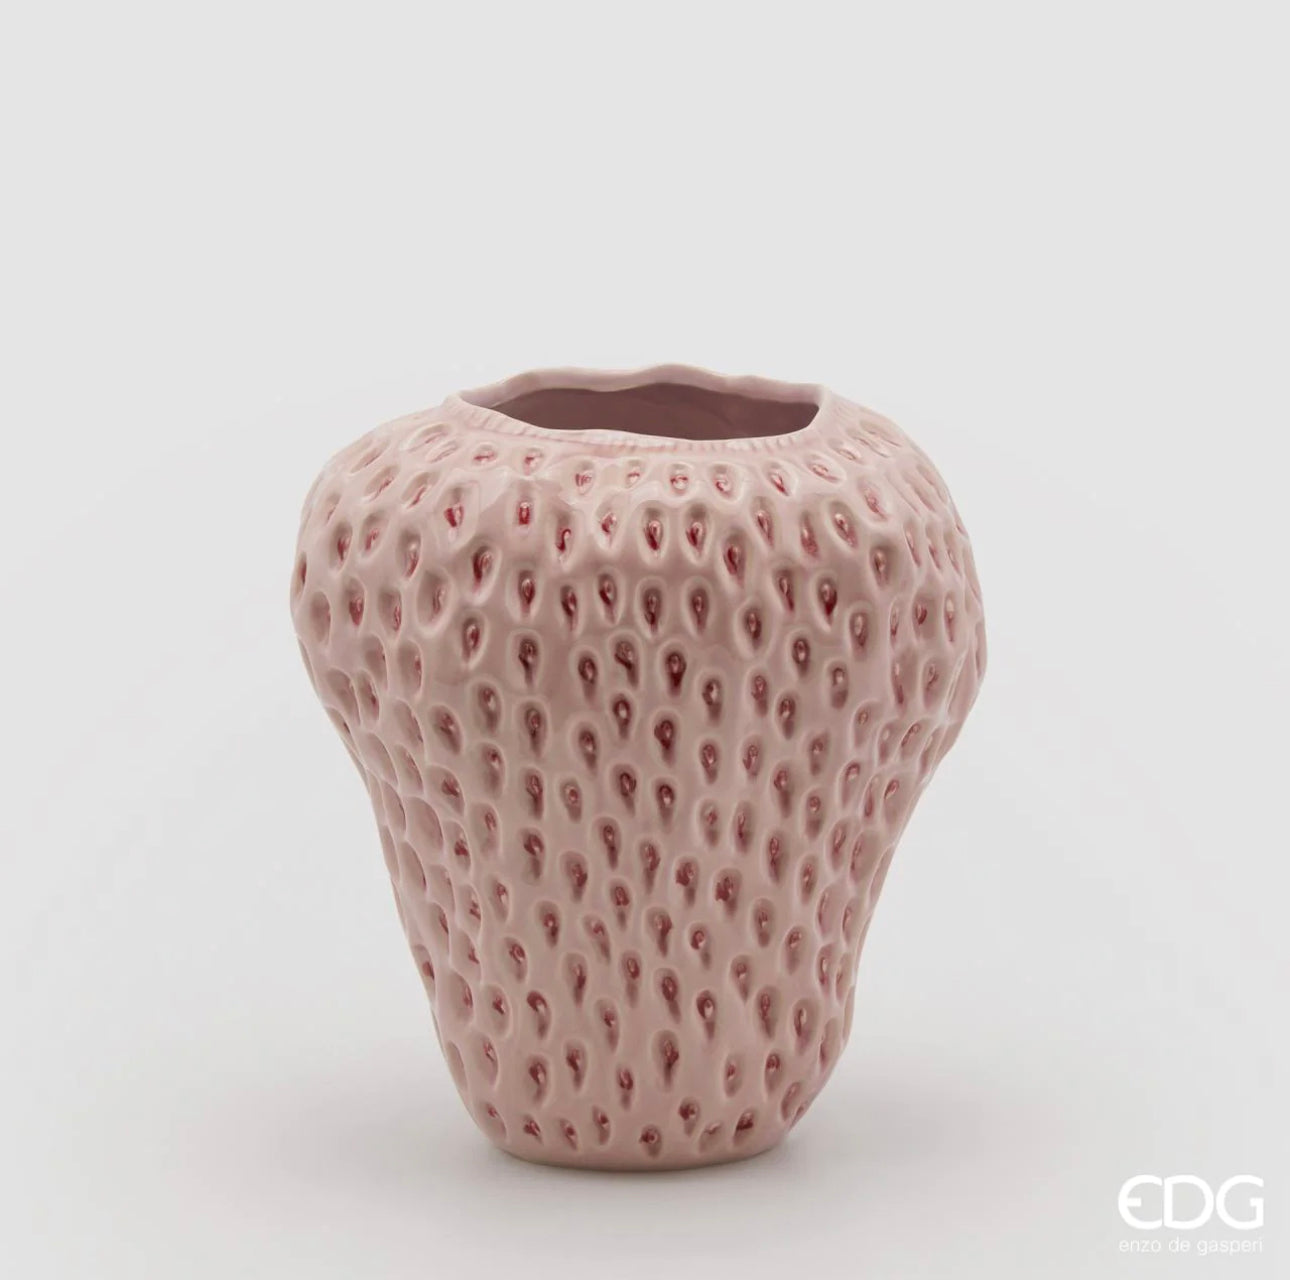 EDG - Composizione vaso fragola